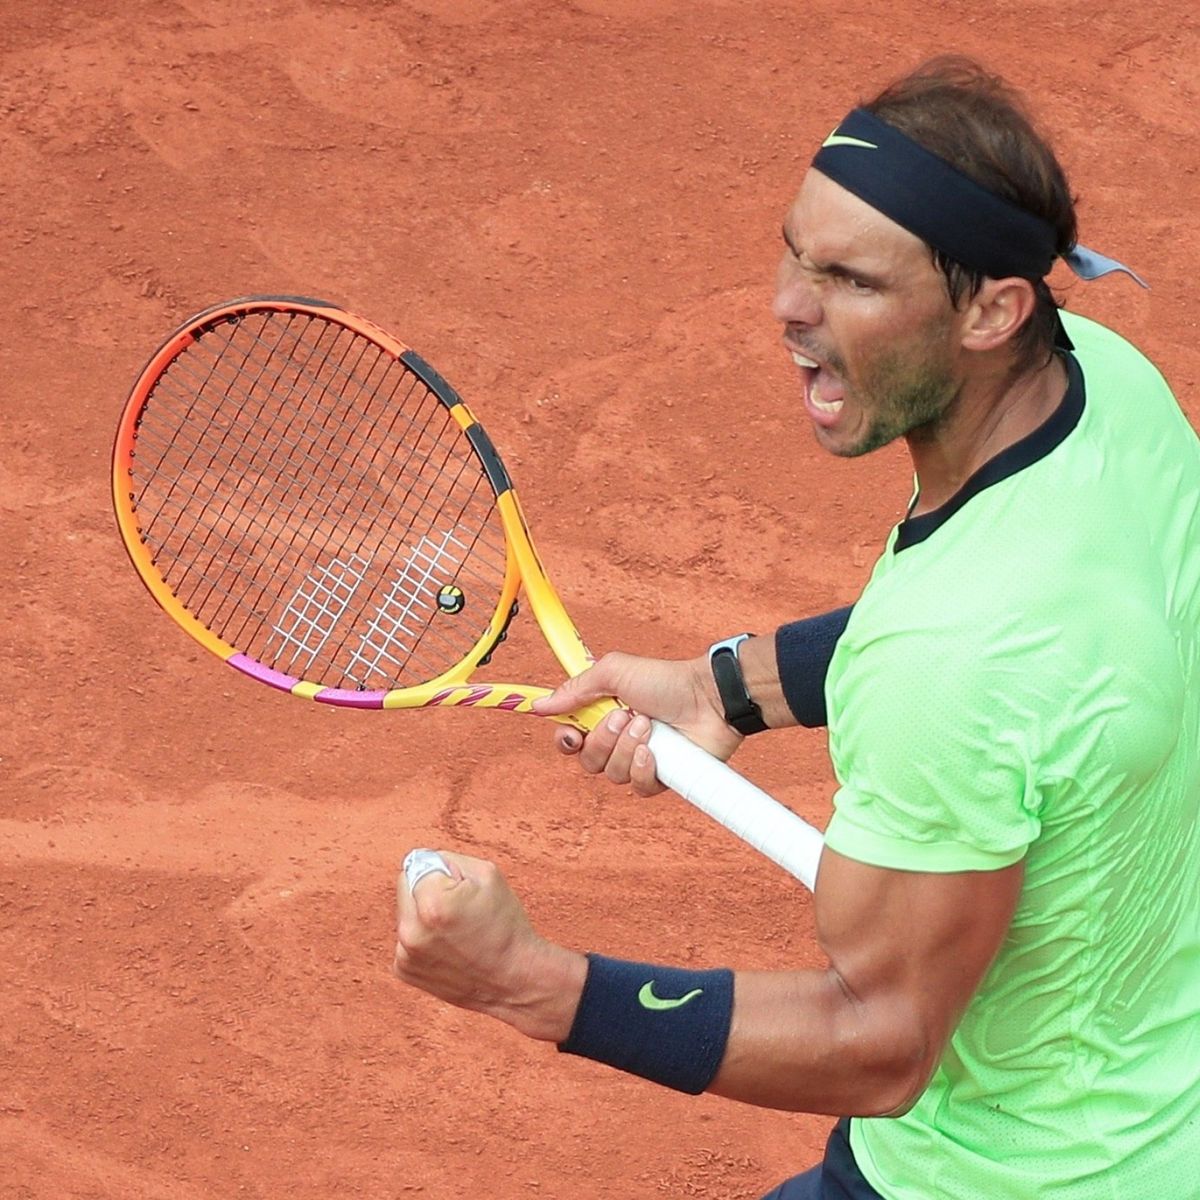 Diplomático despierta precio La de Rafa Nadal, Djokovic o Federer? Las raquetas de tenis mejor valoradas